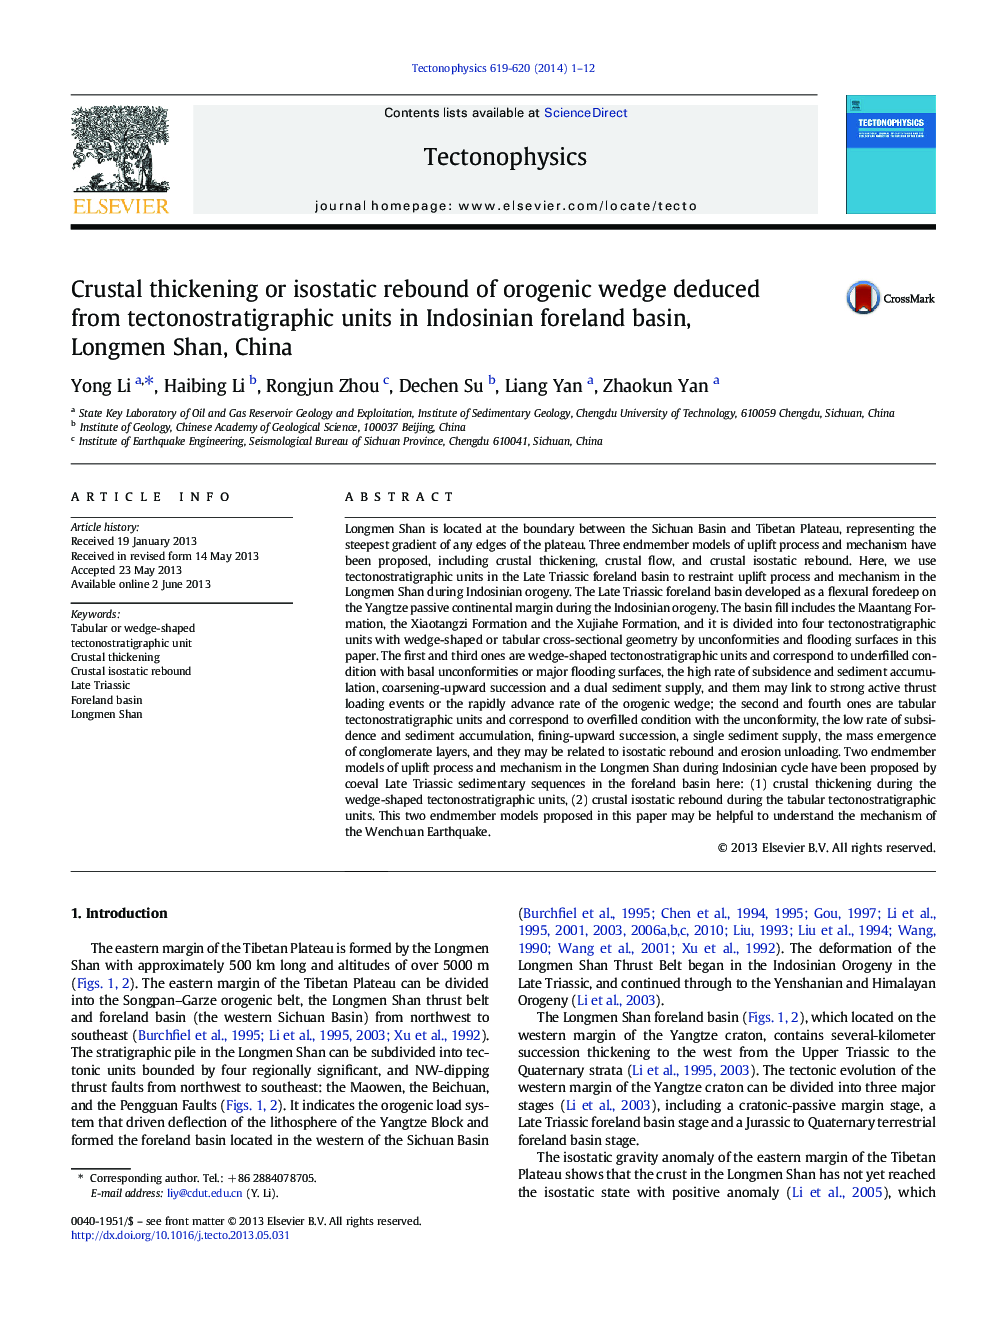 Crustal thickening or isostatic rebound of orogenic wedge deduced from tectonostratigraphic units in Indosinian foreland basin, Longmen Shan, China